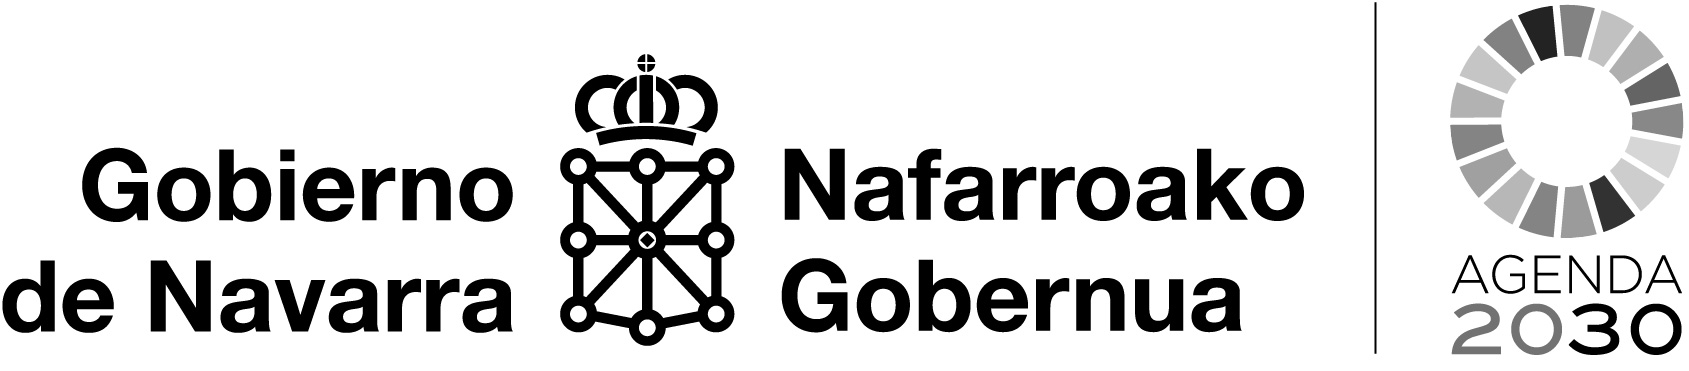 logo GOB 2019 + Agenda 2030-1c-TR-01